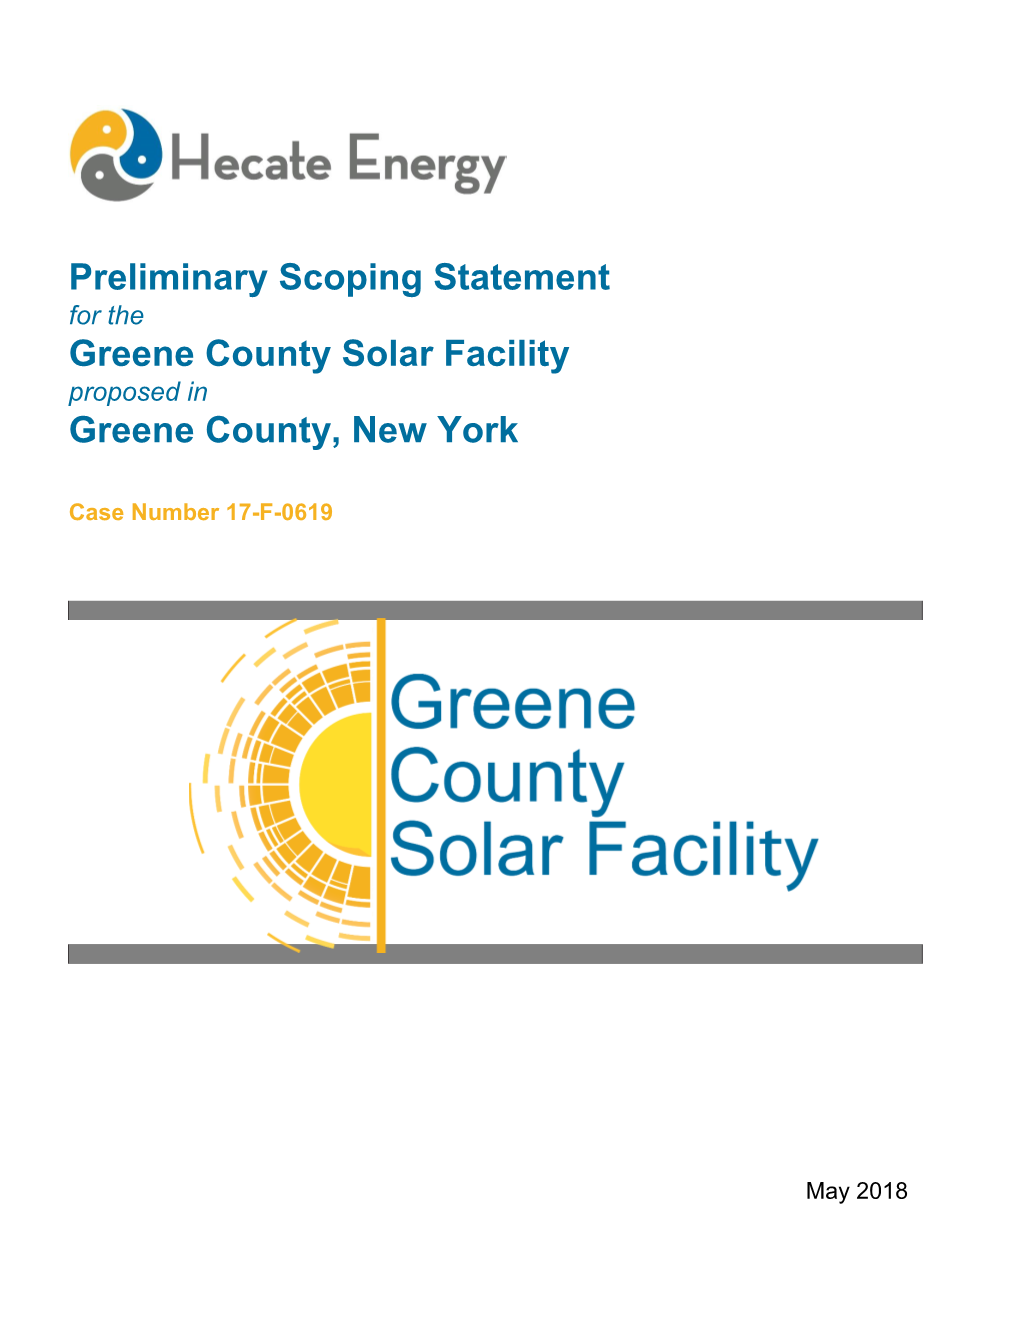 Greene County Solar Facility Preliminary Scoping Statement